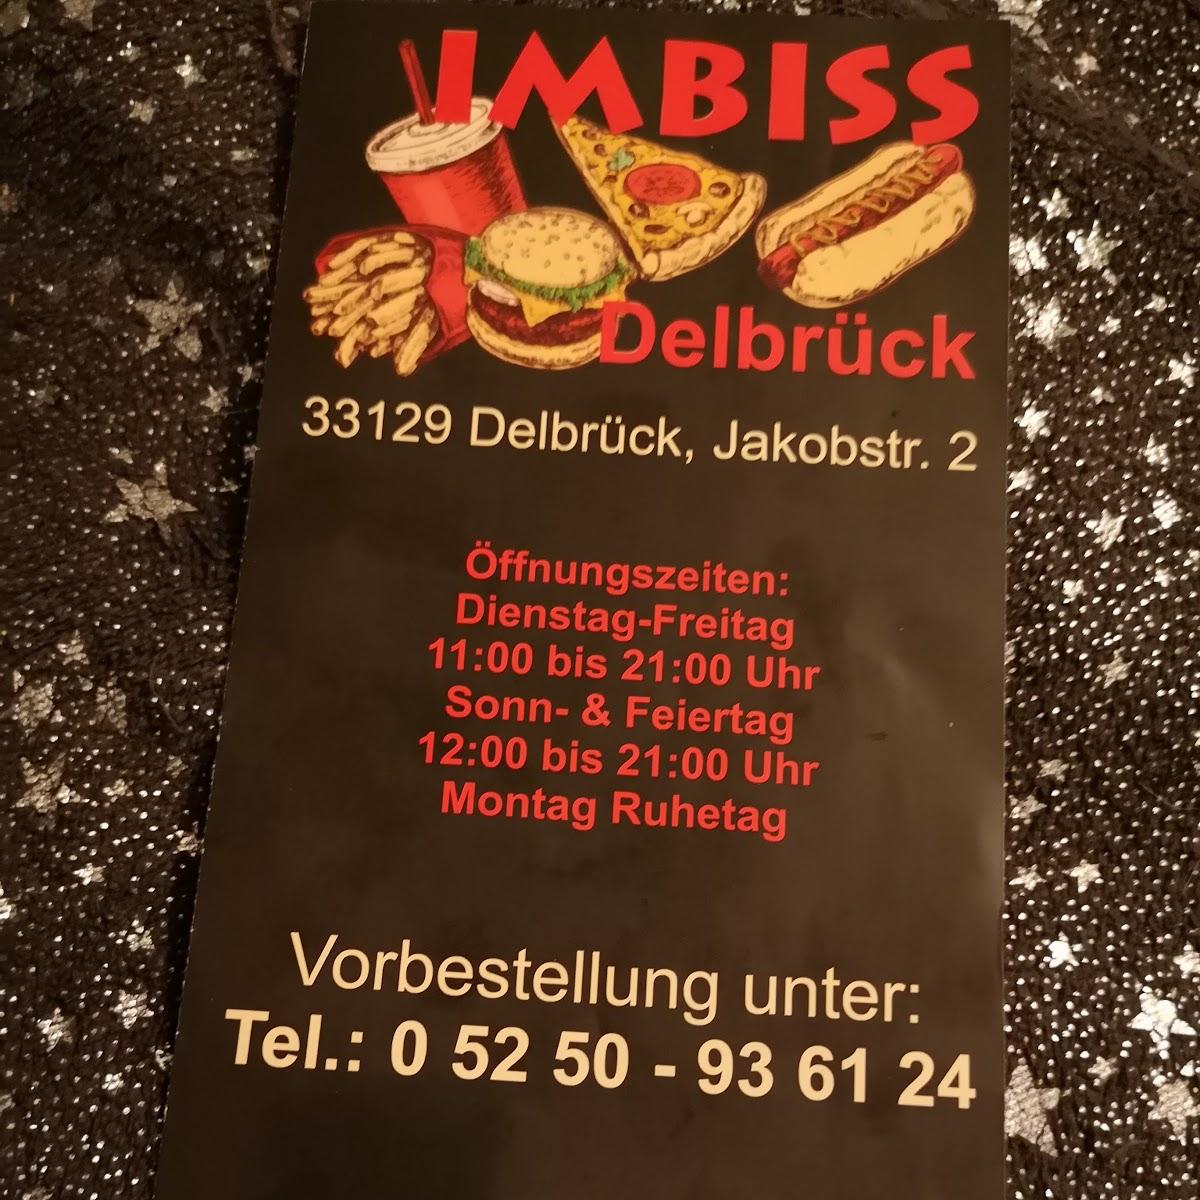 Restaurant "Imbiss" in  Delbrück